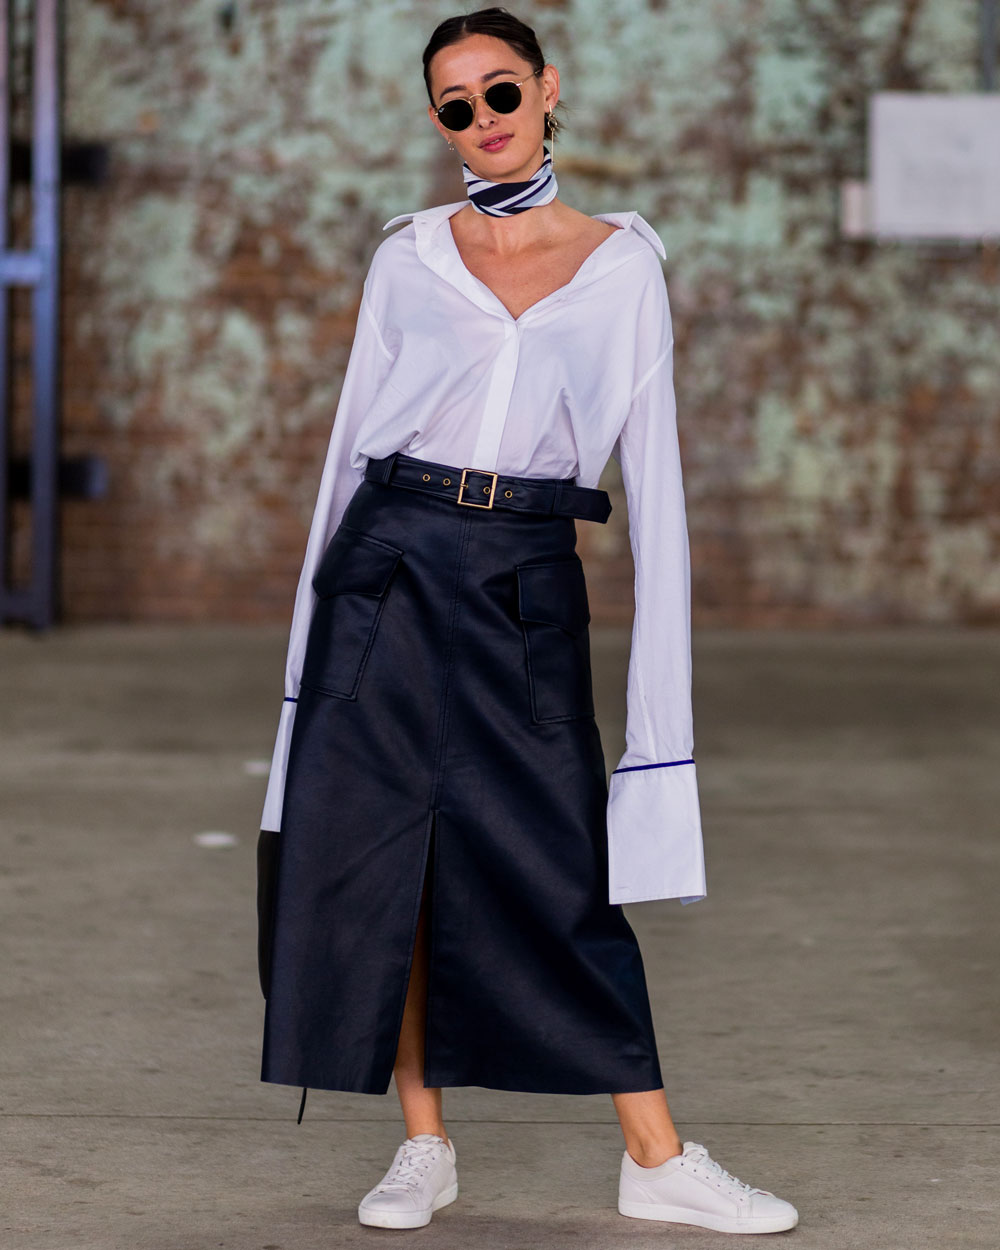 dramatic sleeves MBFWA street style fashion trends